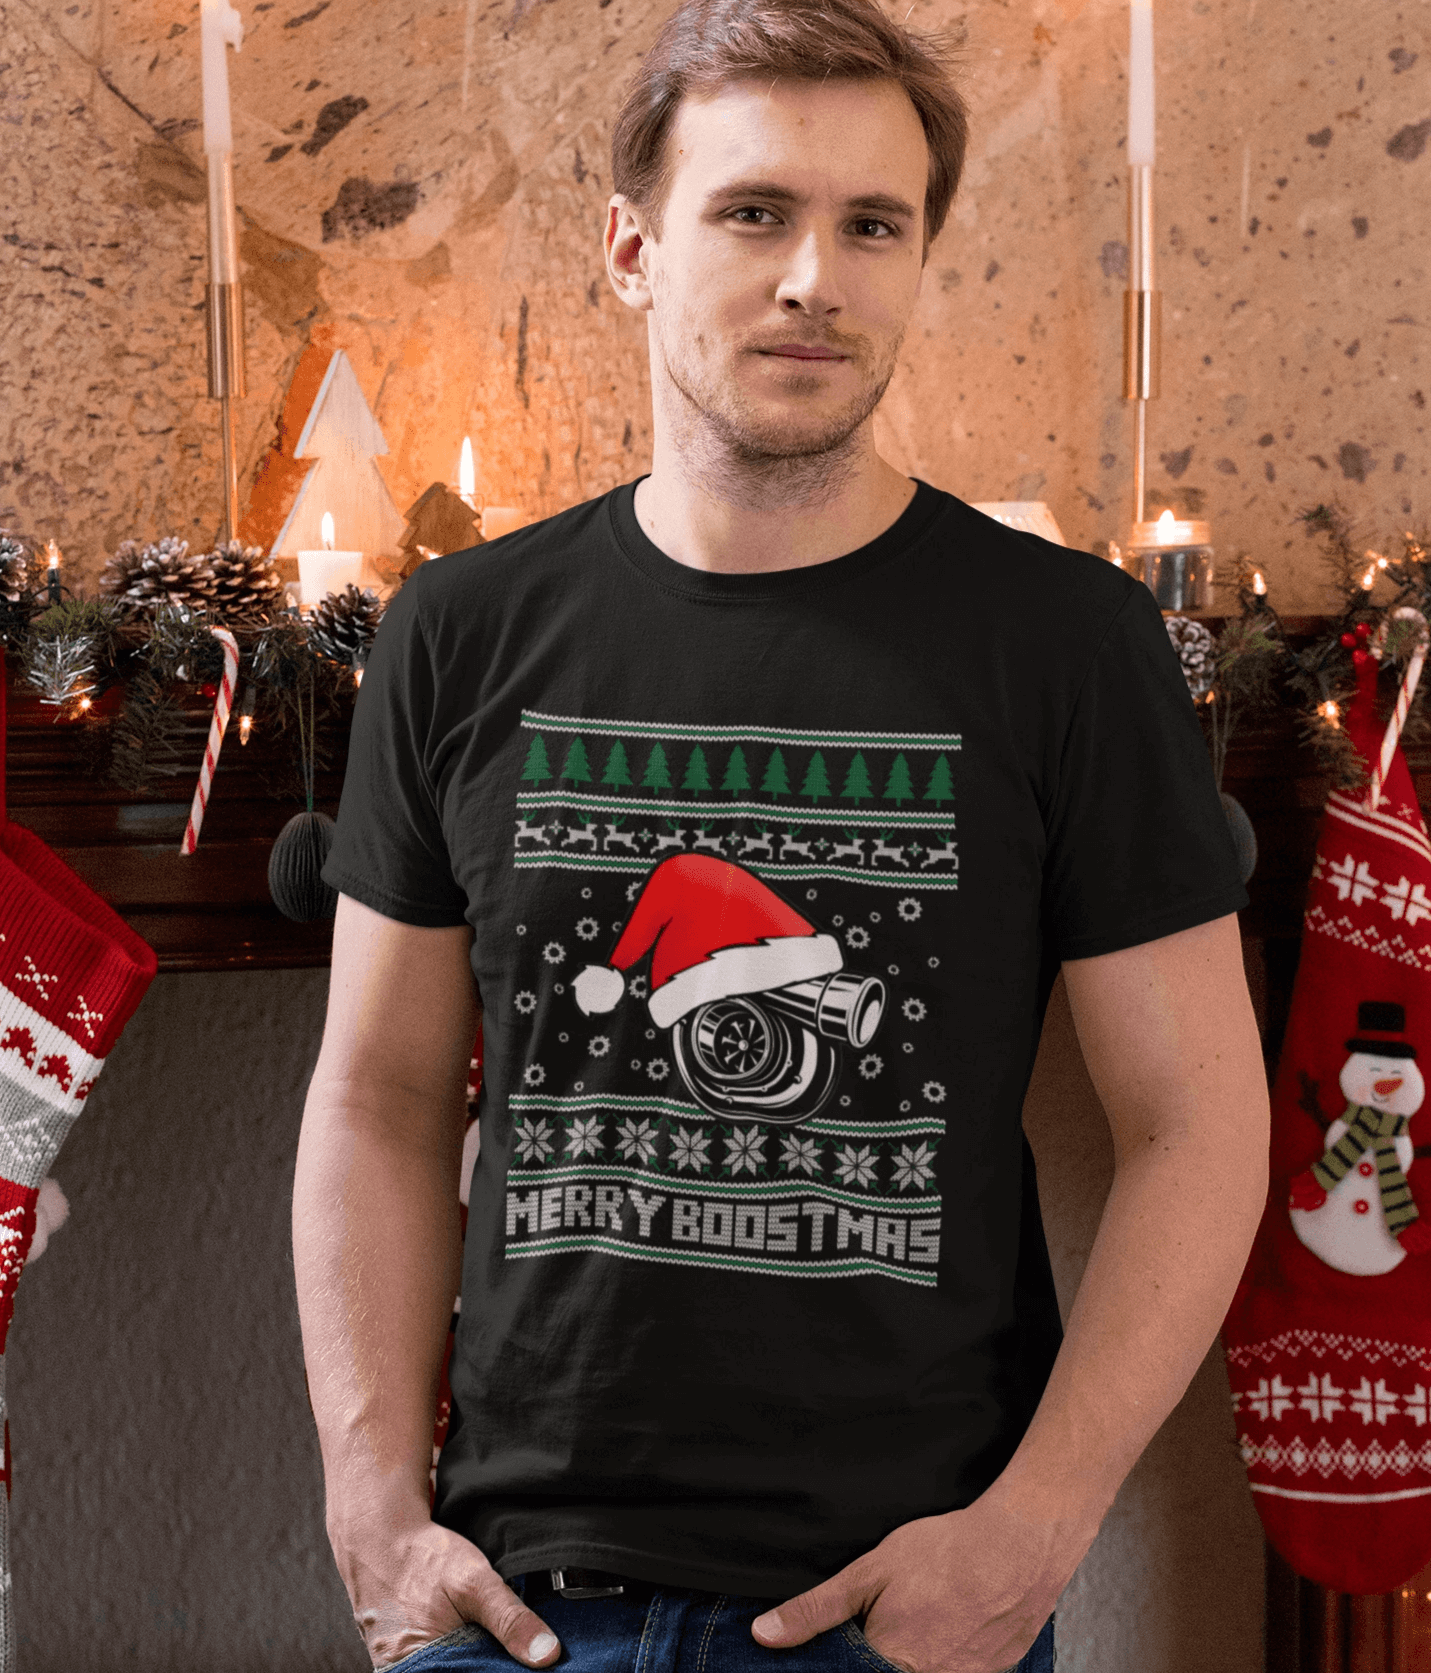 merry boostmas - ugly christmas design, funny black t-shirt, car apparel, xmas gift, christmas gift, turbo, jdm, racecar, the perfect gift